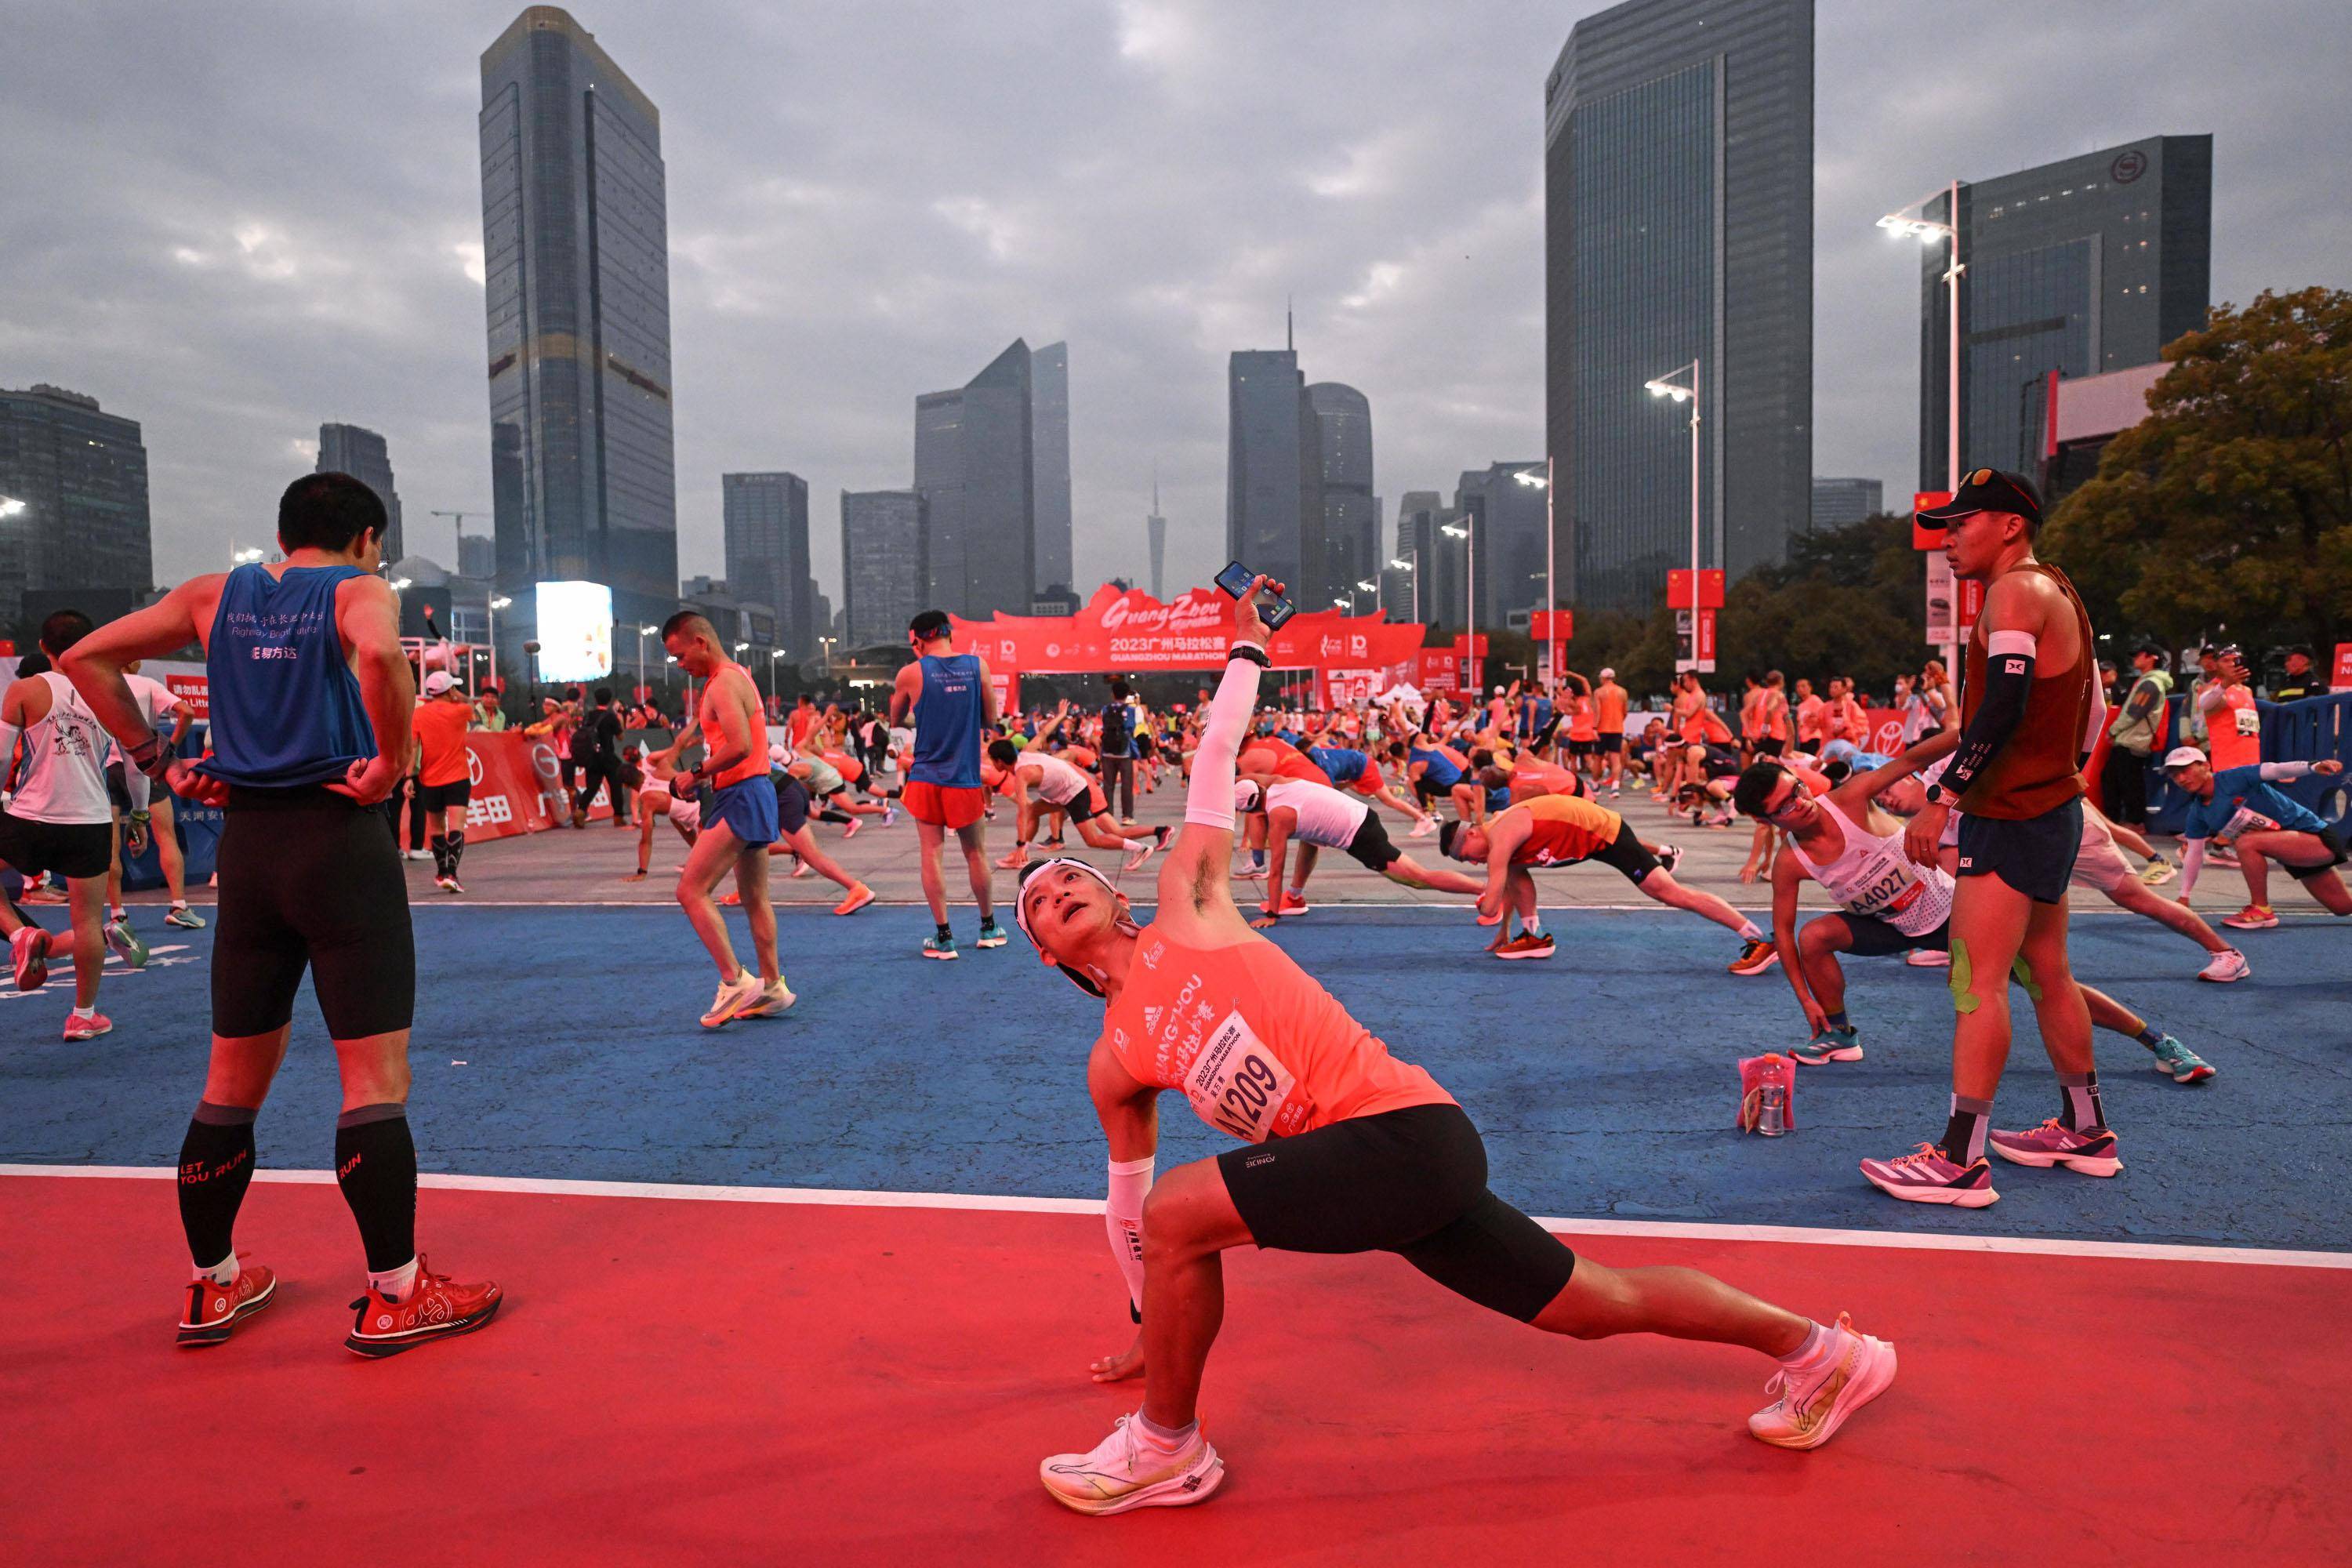 【168sports】一年43场马拉松赛事！广东马拉松赛事是如何监管的？